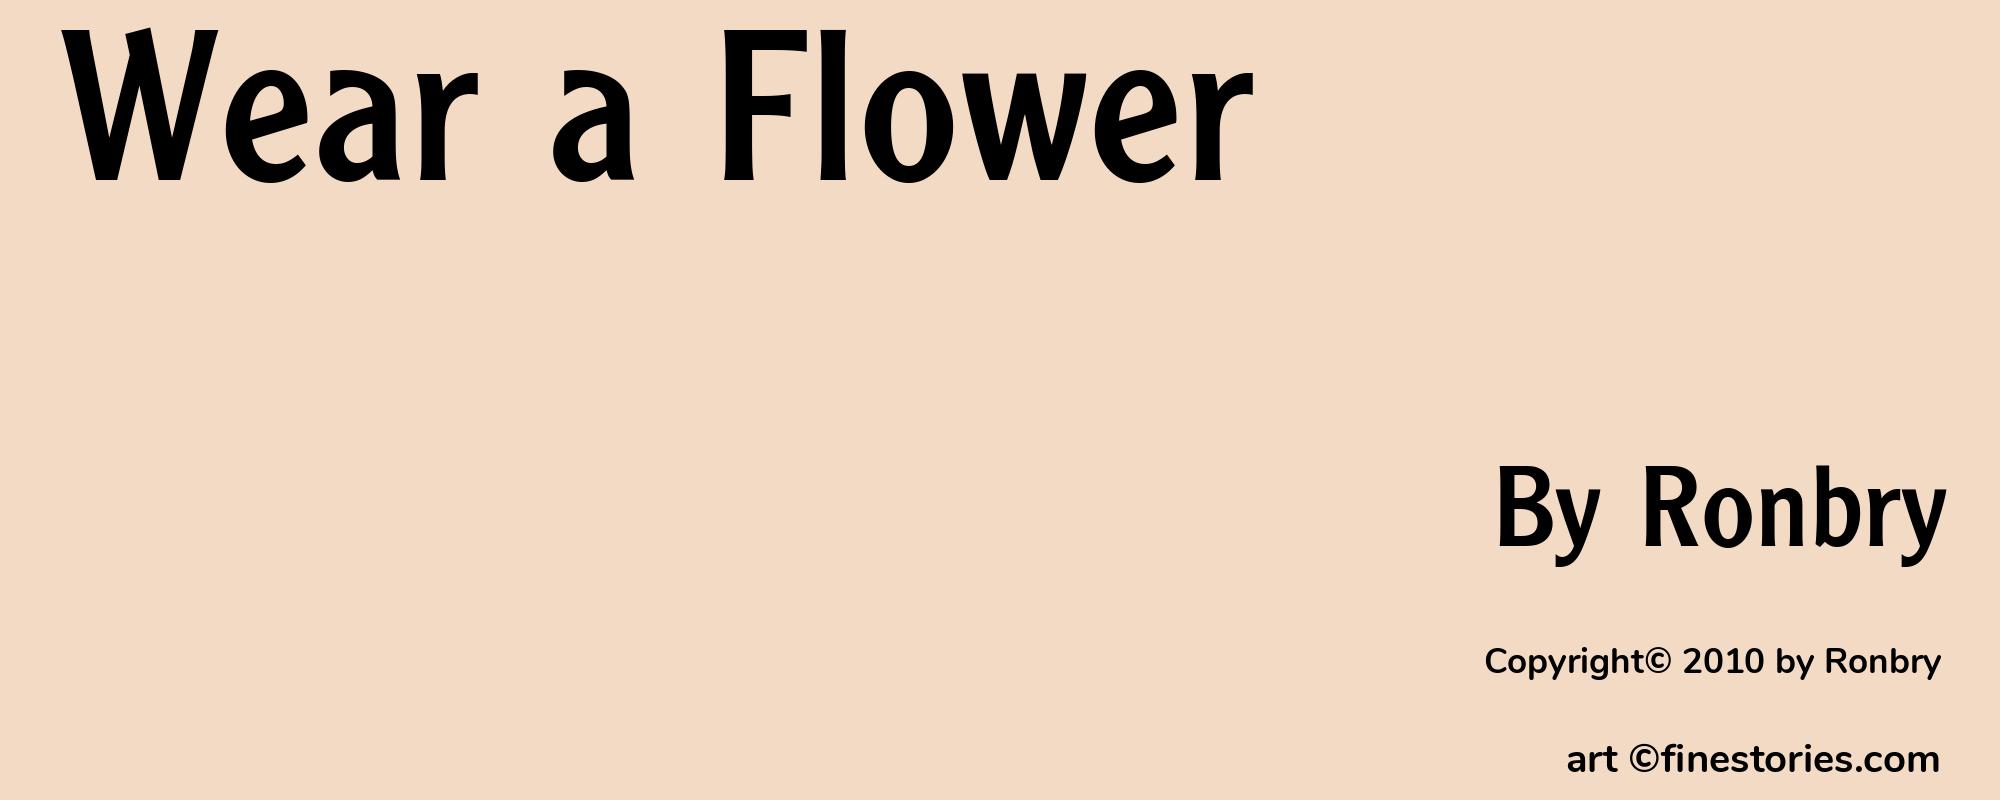 Wear a Flower - Cover